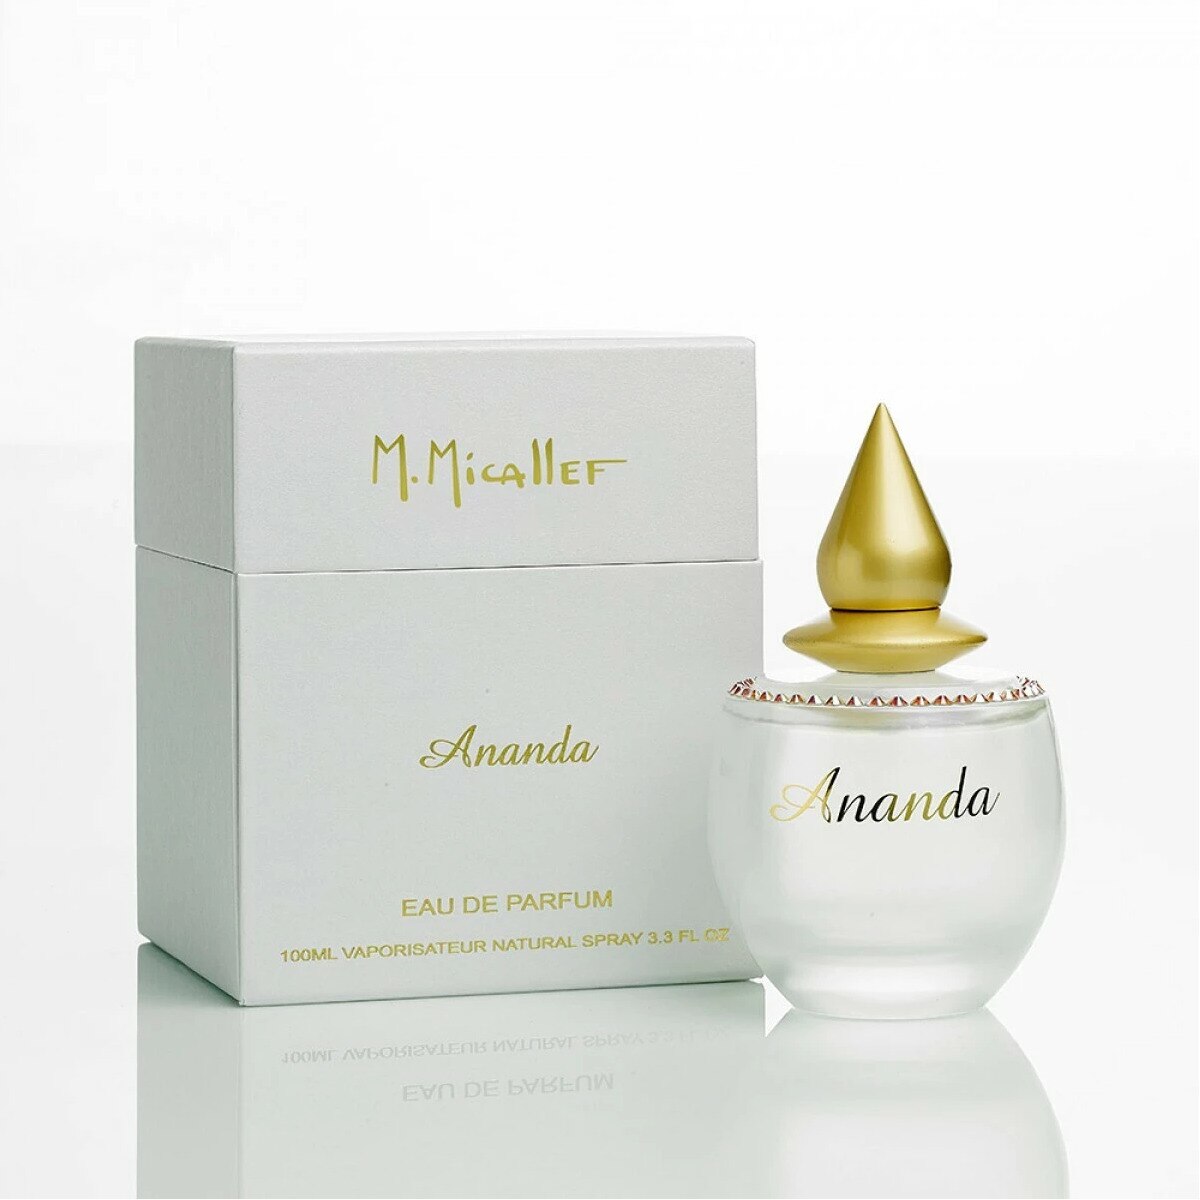 Women-s-perfume-M-Micallef-Ananda-eau-de-parfum-100-ml-Mikallef-Ananda-for-women